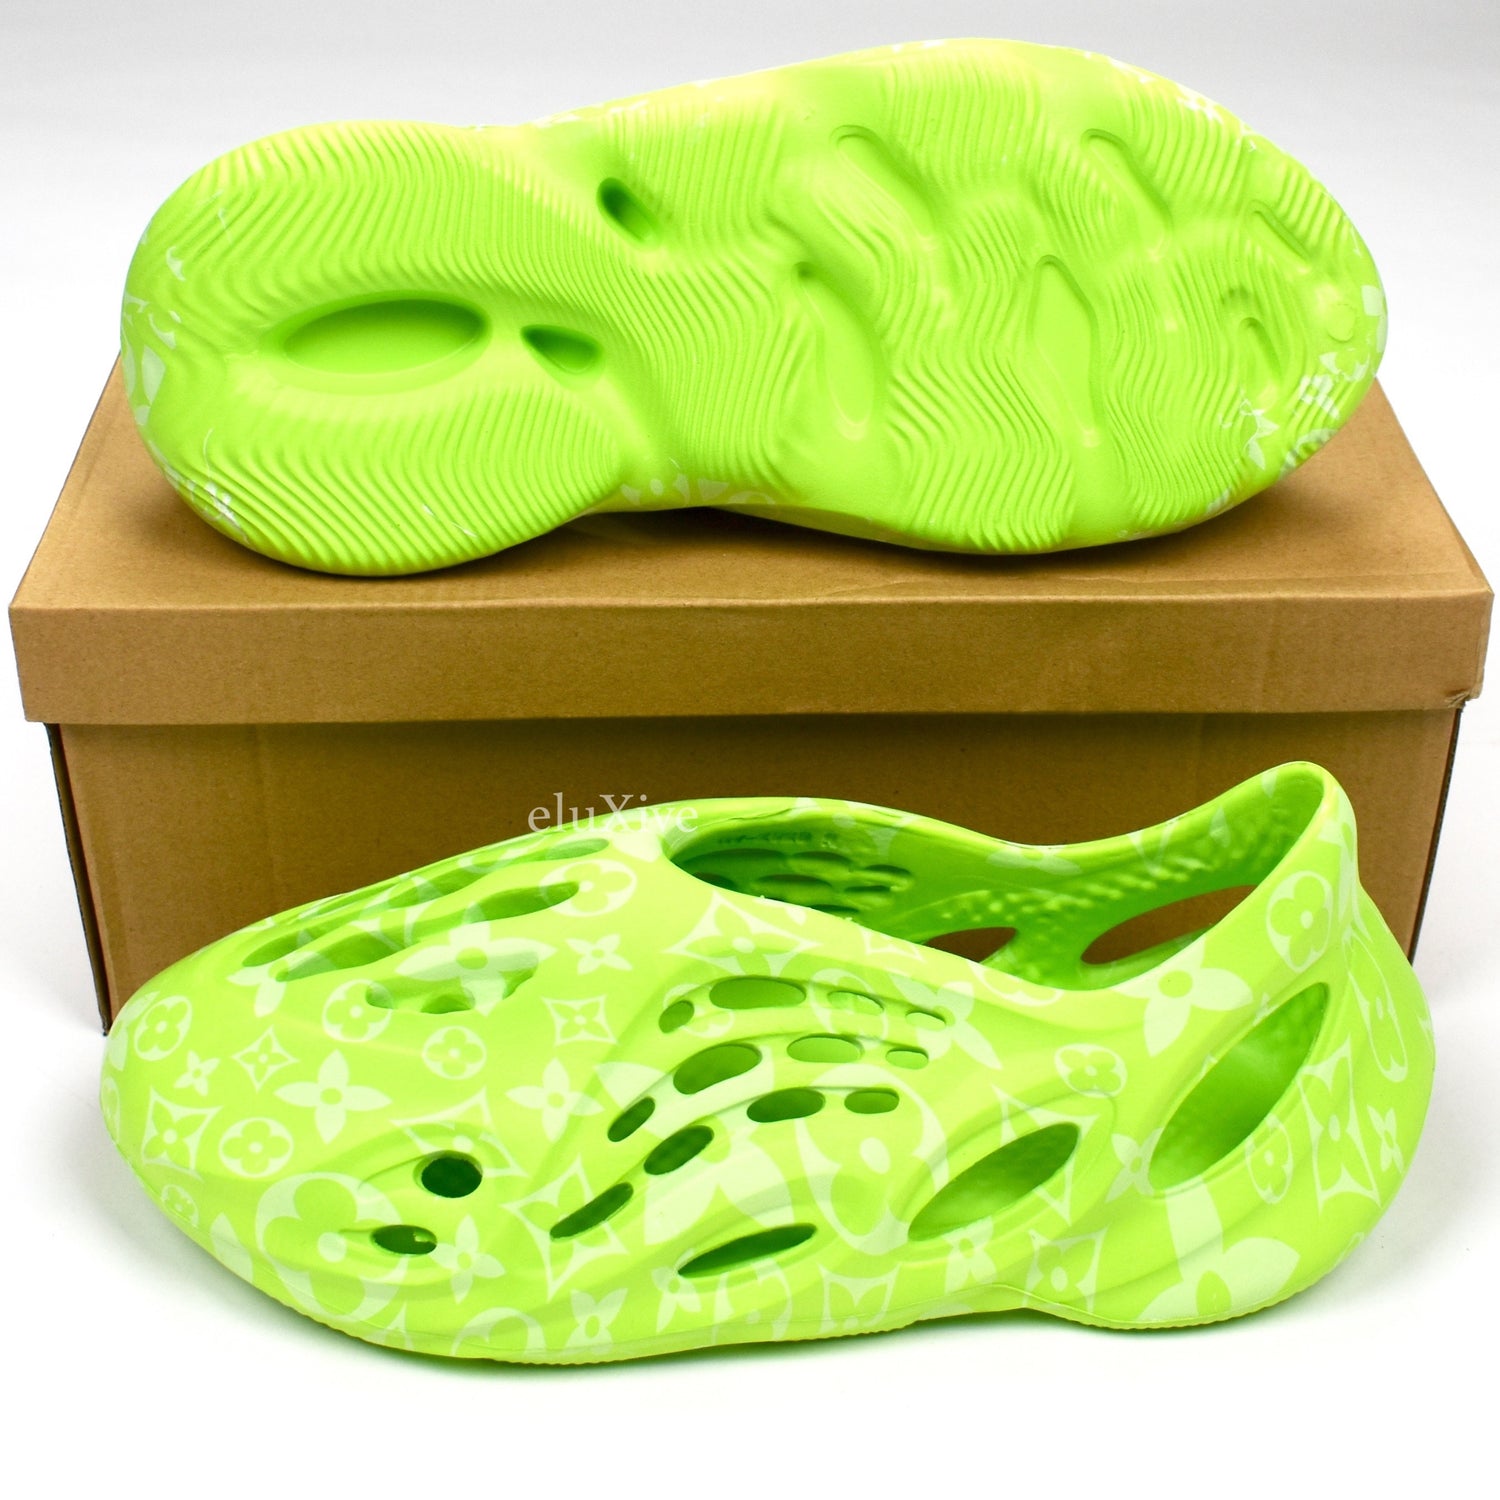 yeezy foam runner green